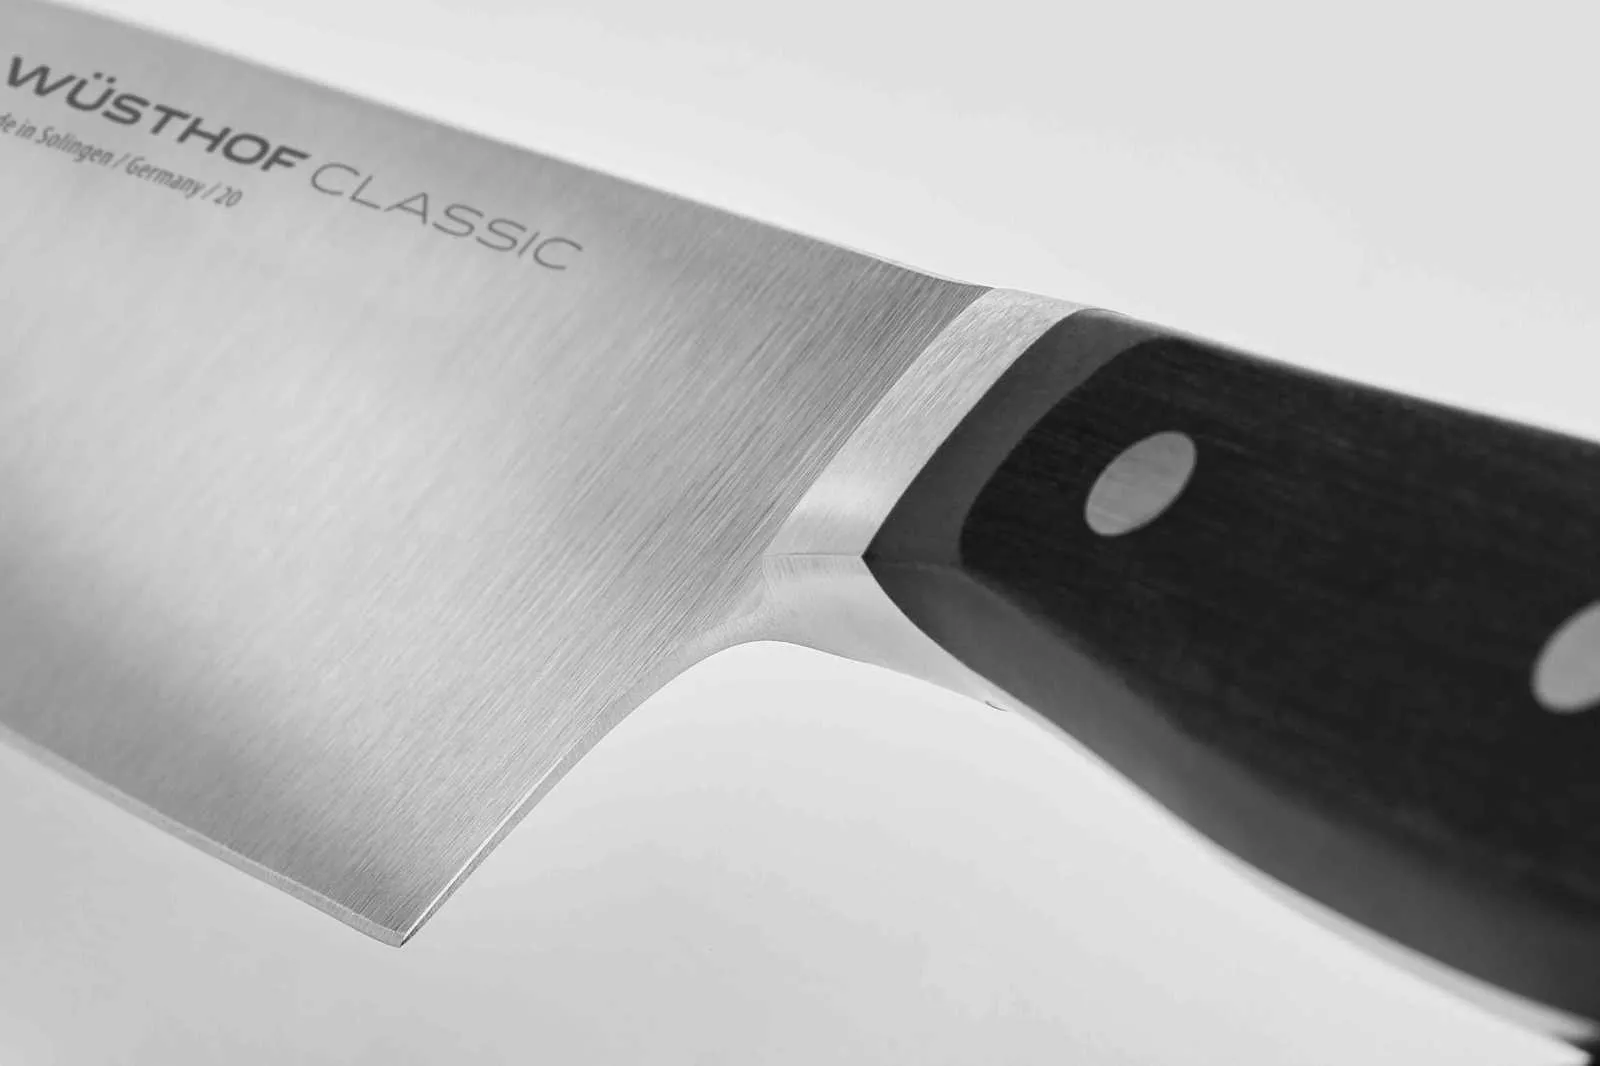 Нож Wuesthof Classic Chai Dao в картонной упаковке, длина 17 см (1040135617) - Фото nav 3